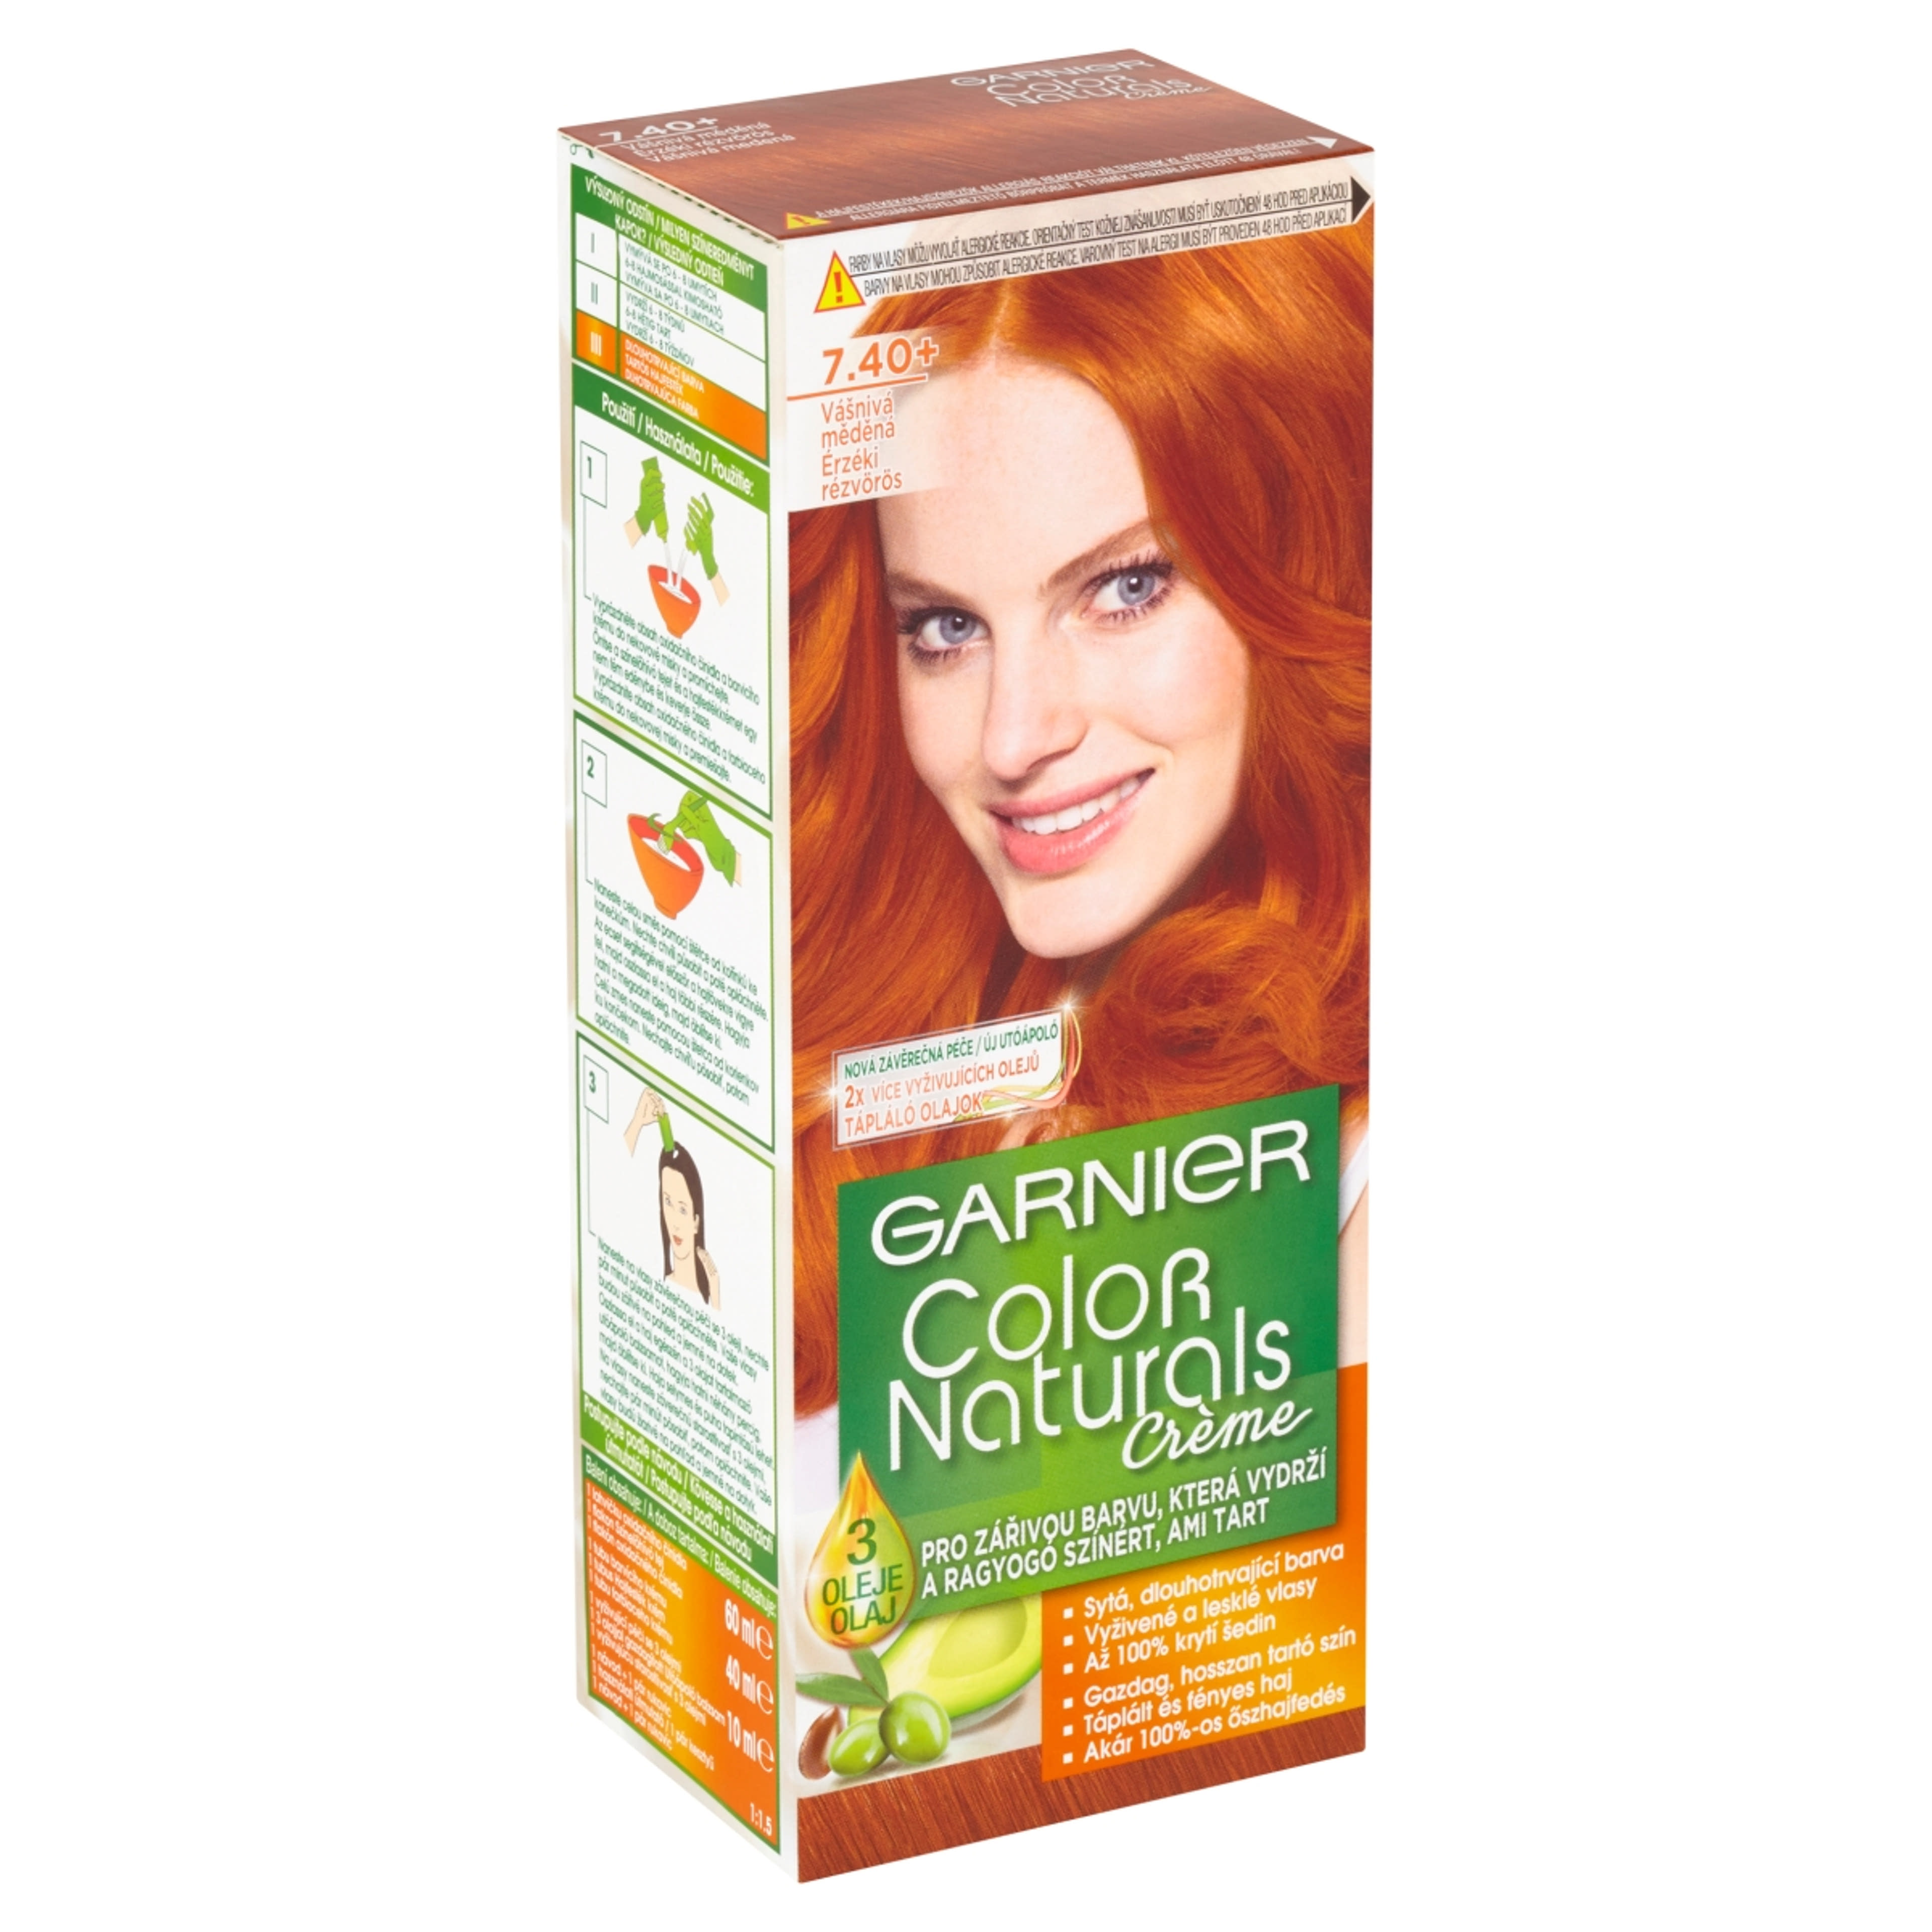 Garnier Color Naturals Tartós hajfesték 7.40 Érzéki rézvörös - 1 db-3